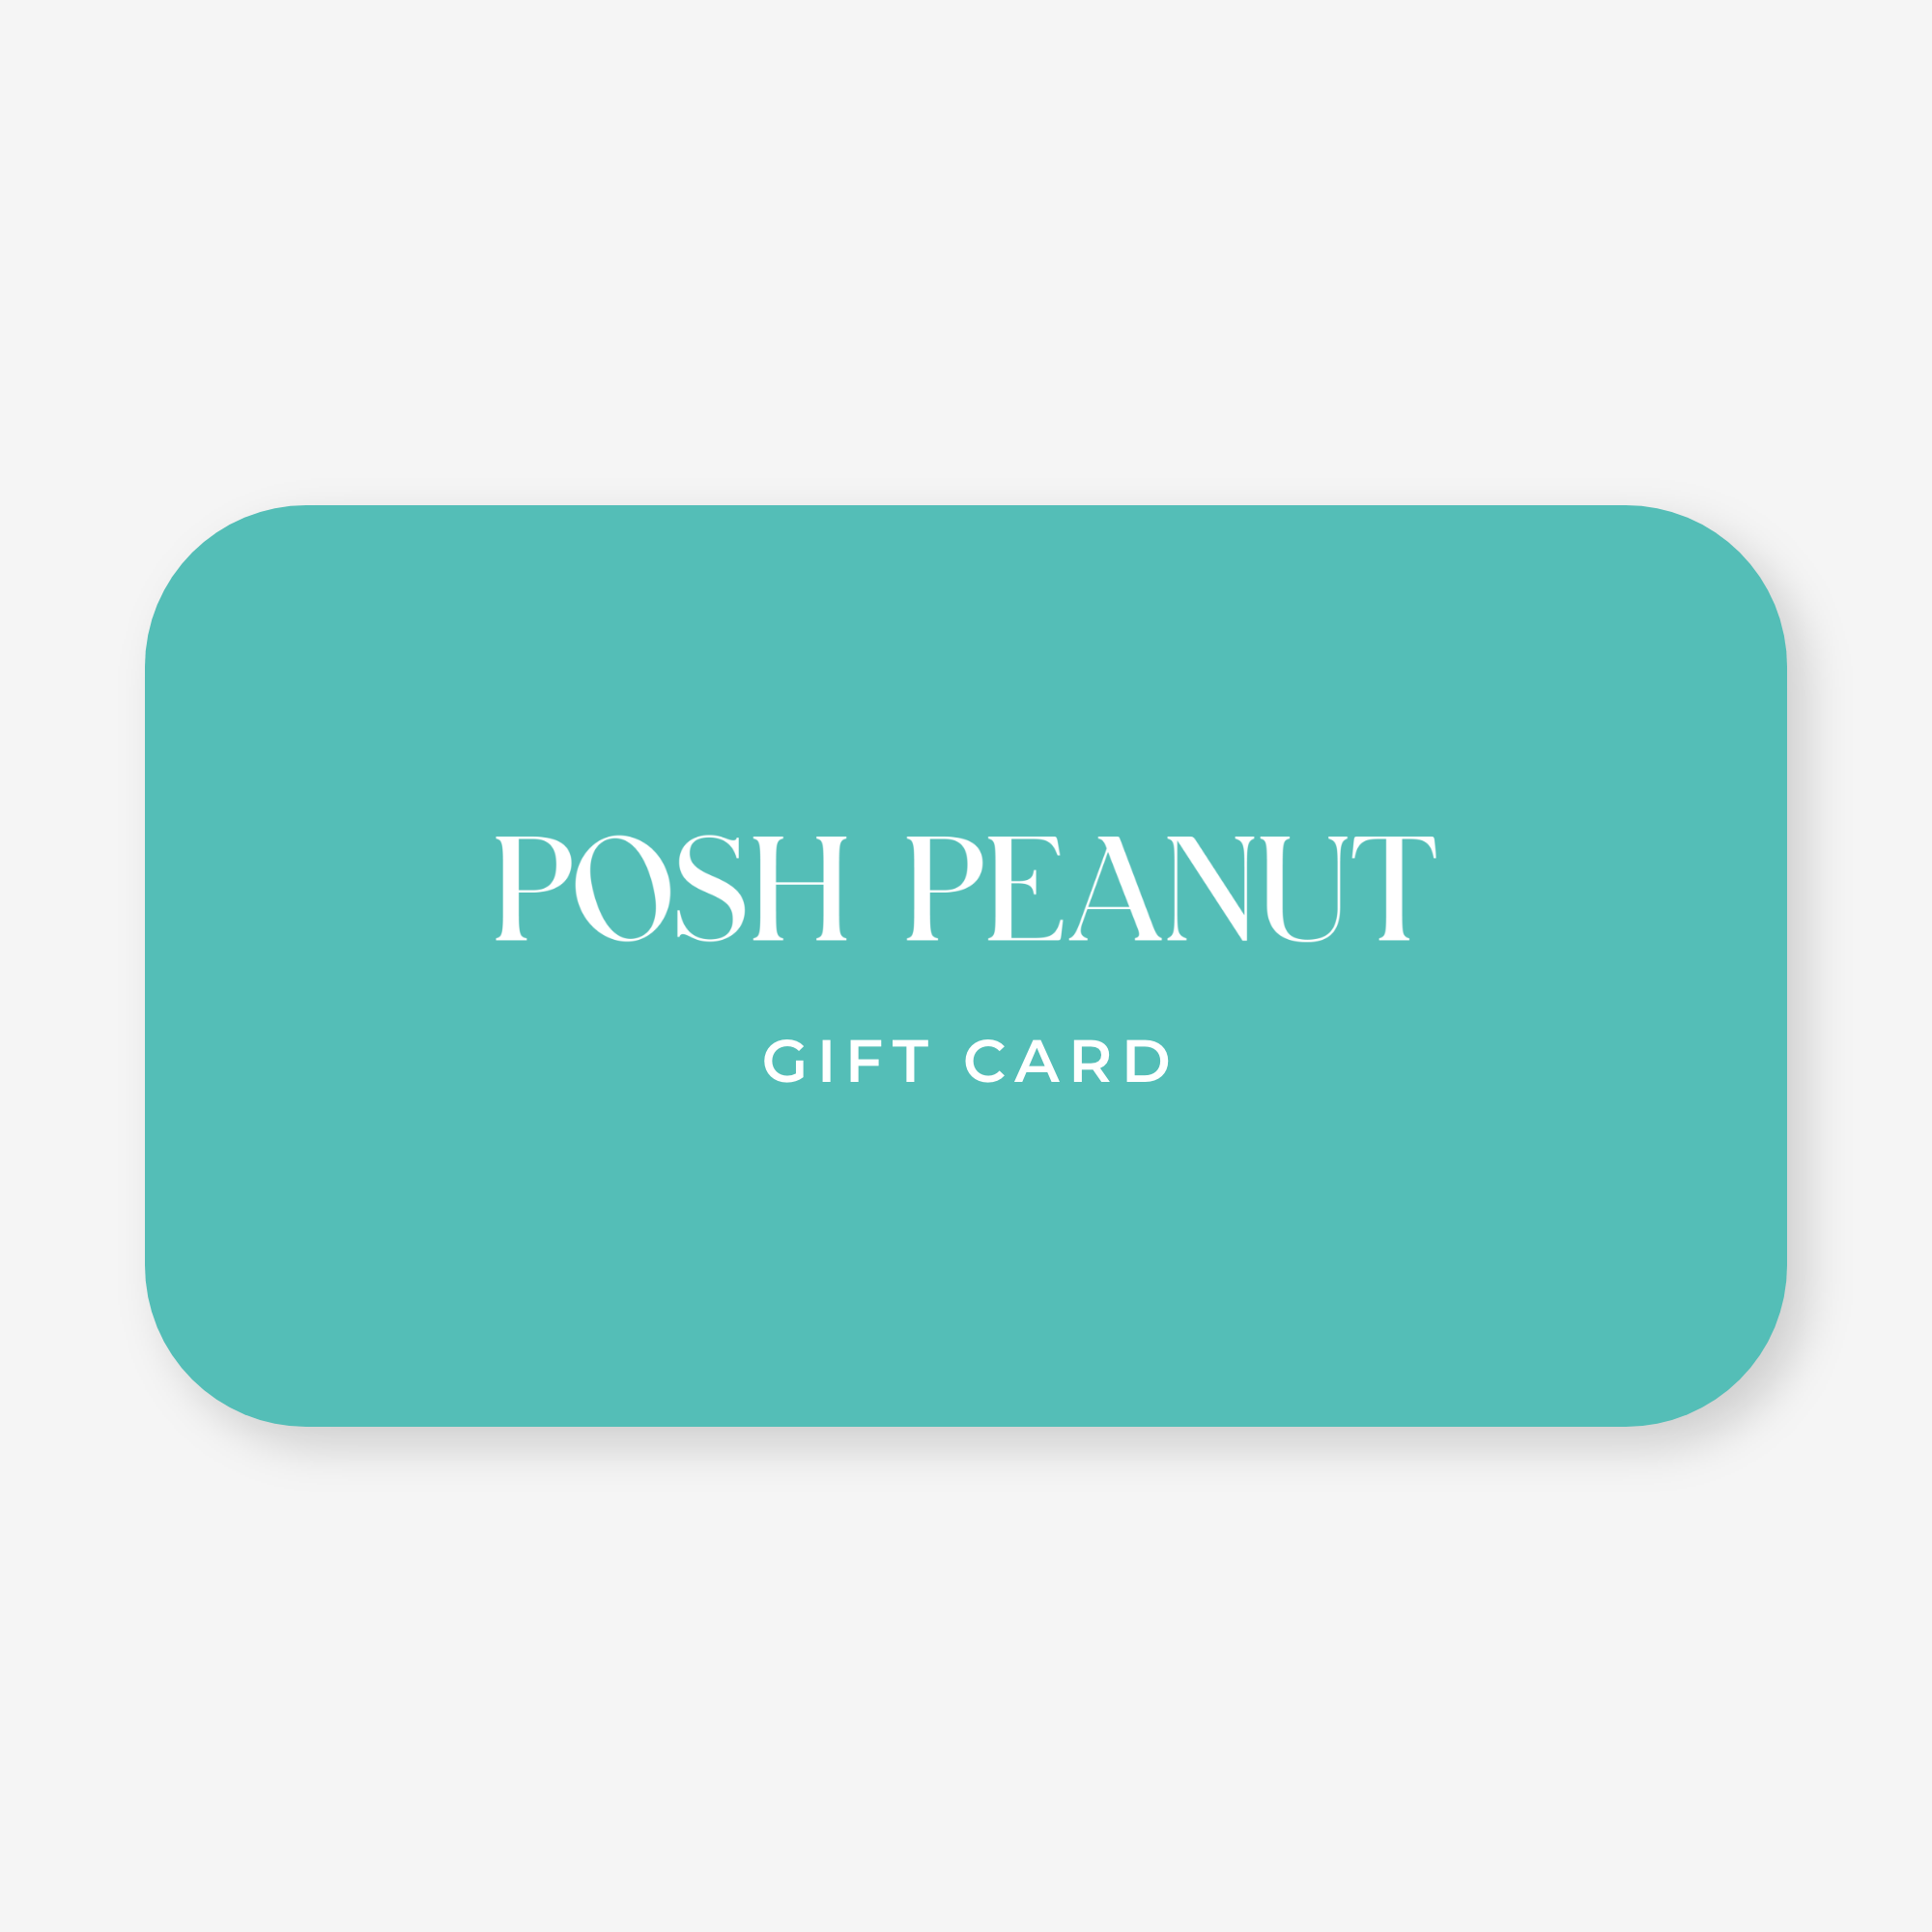 Posh Peanut Gift Card | Digital Gift Cards